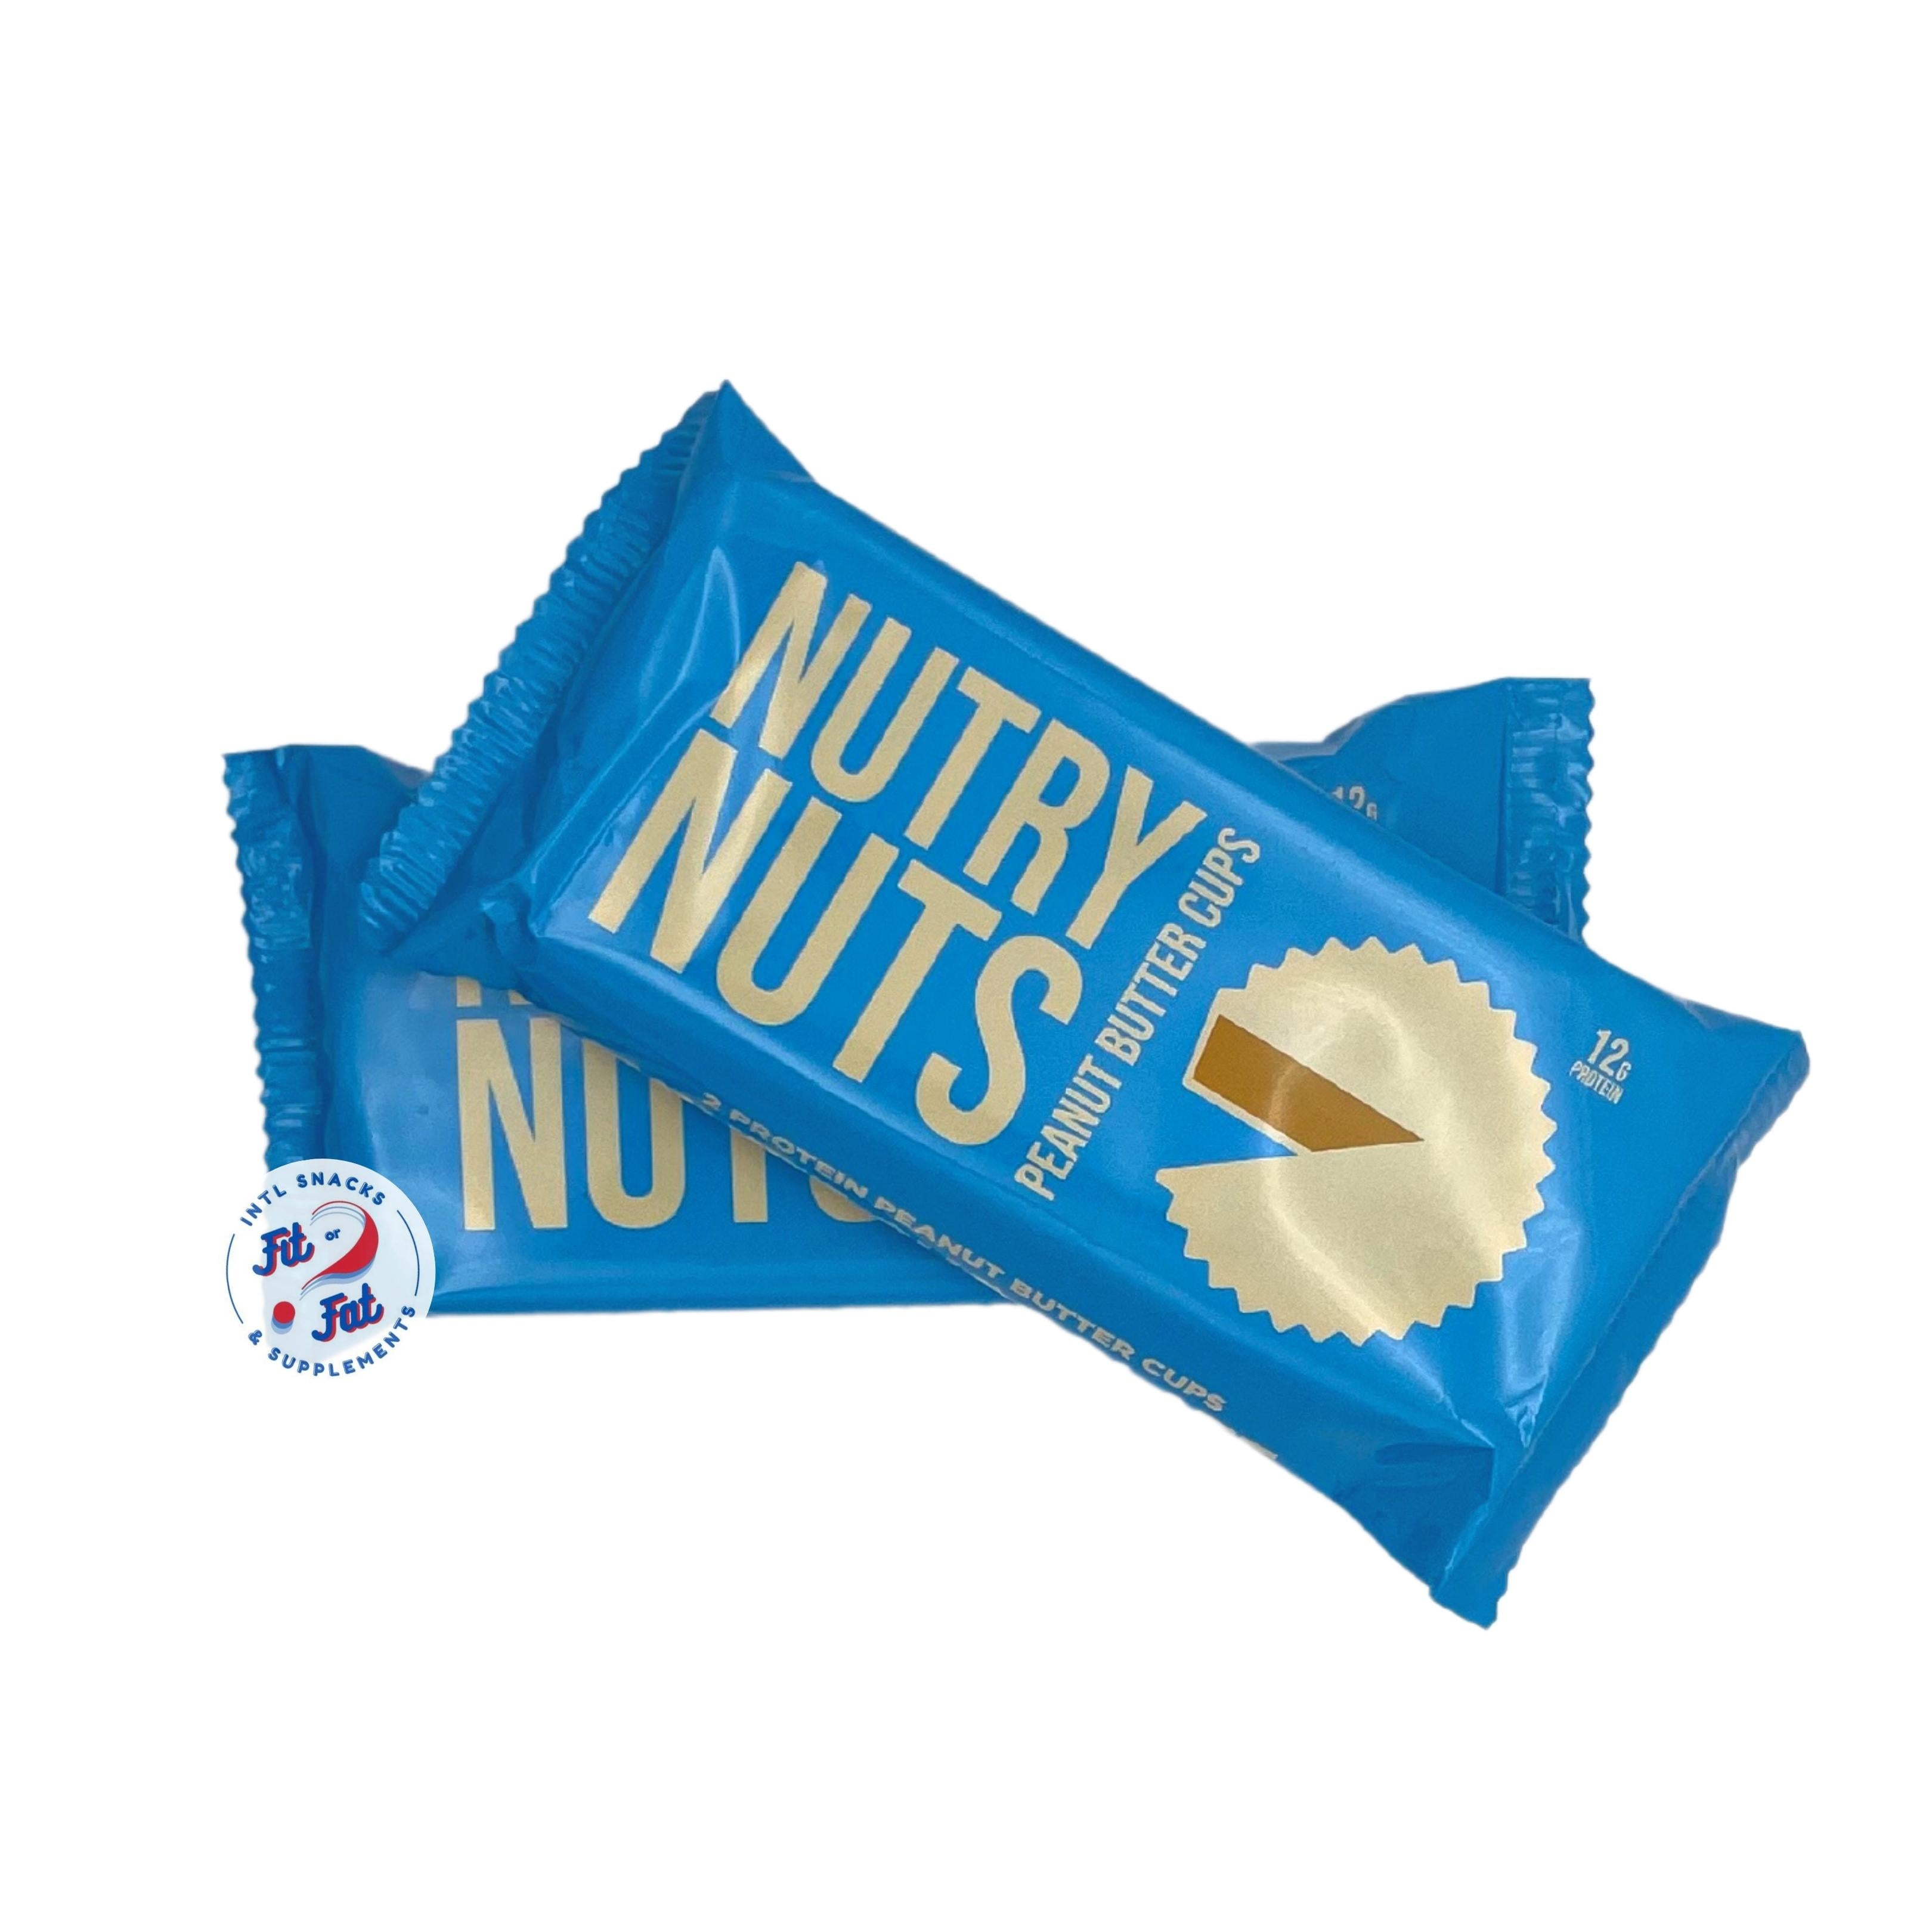 NutryNuts  White Chocolate & Peanuts